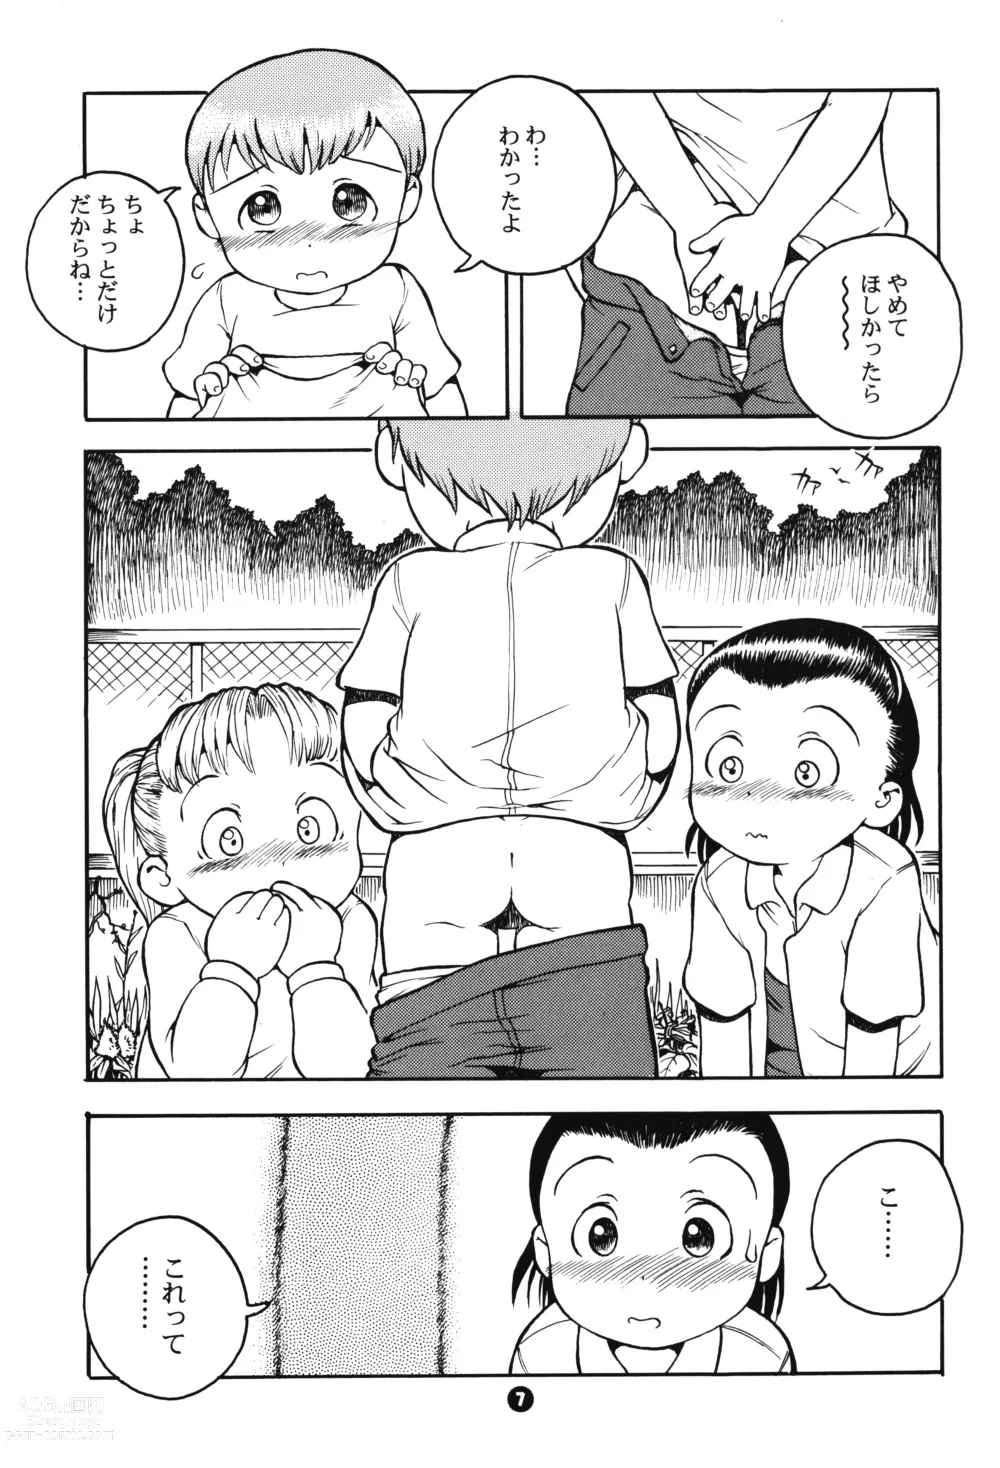 Page 6 of doujinshi MP #2